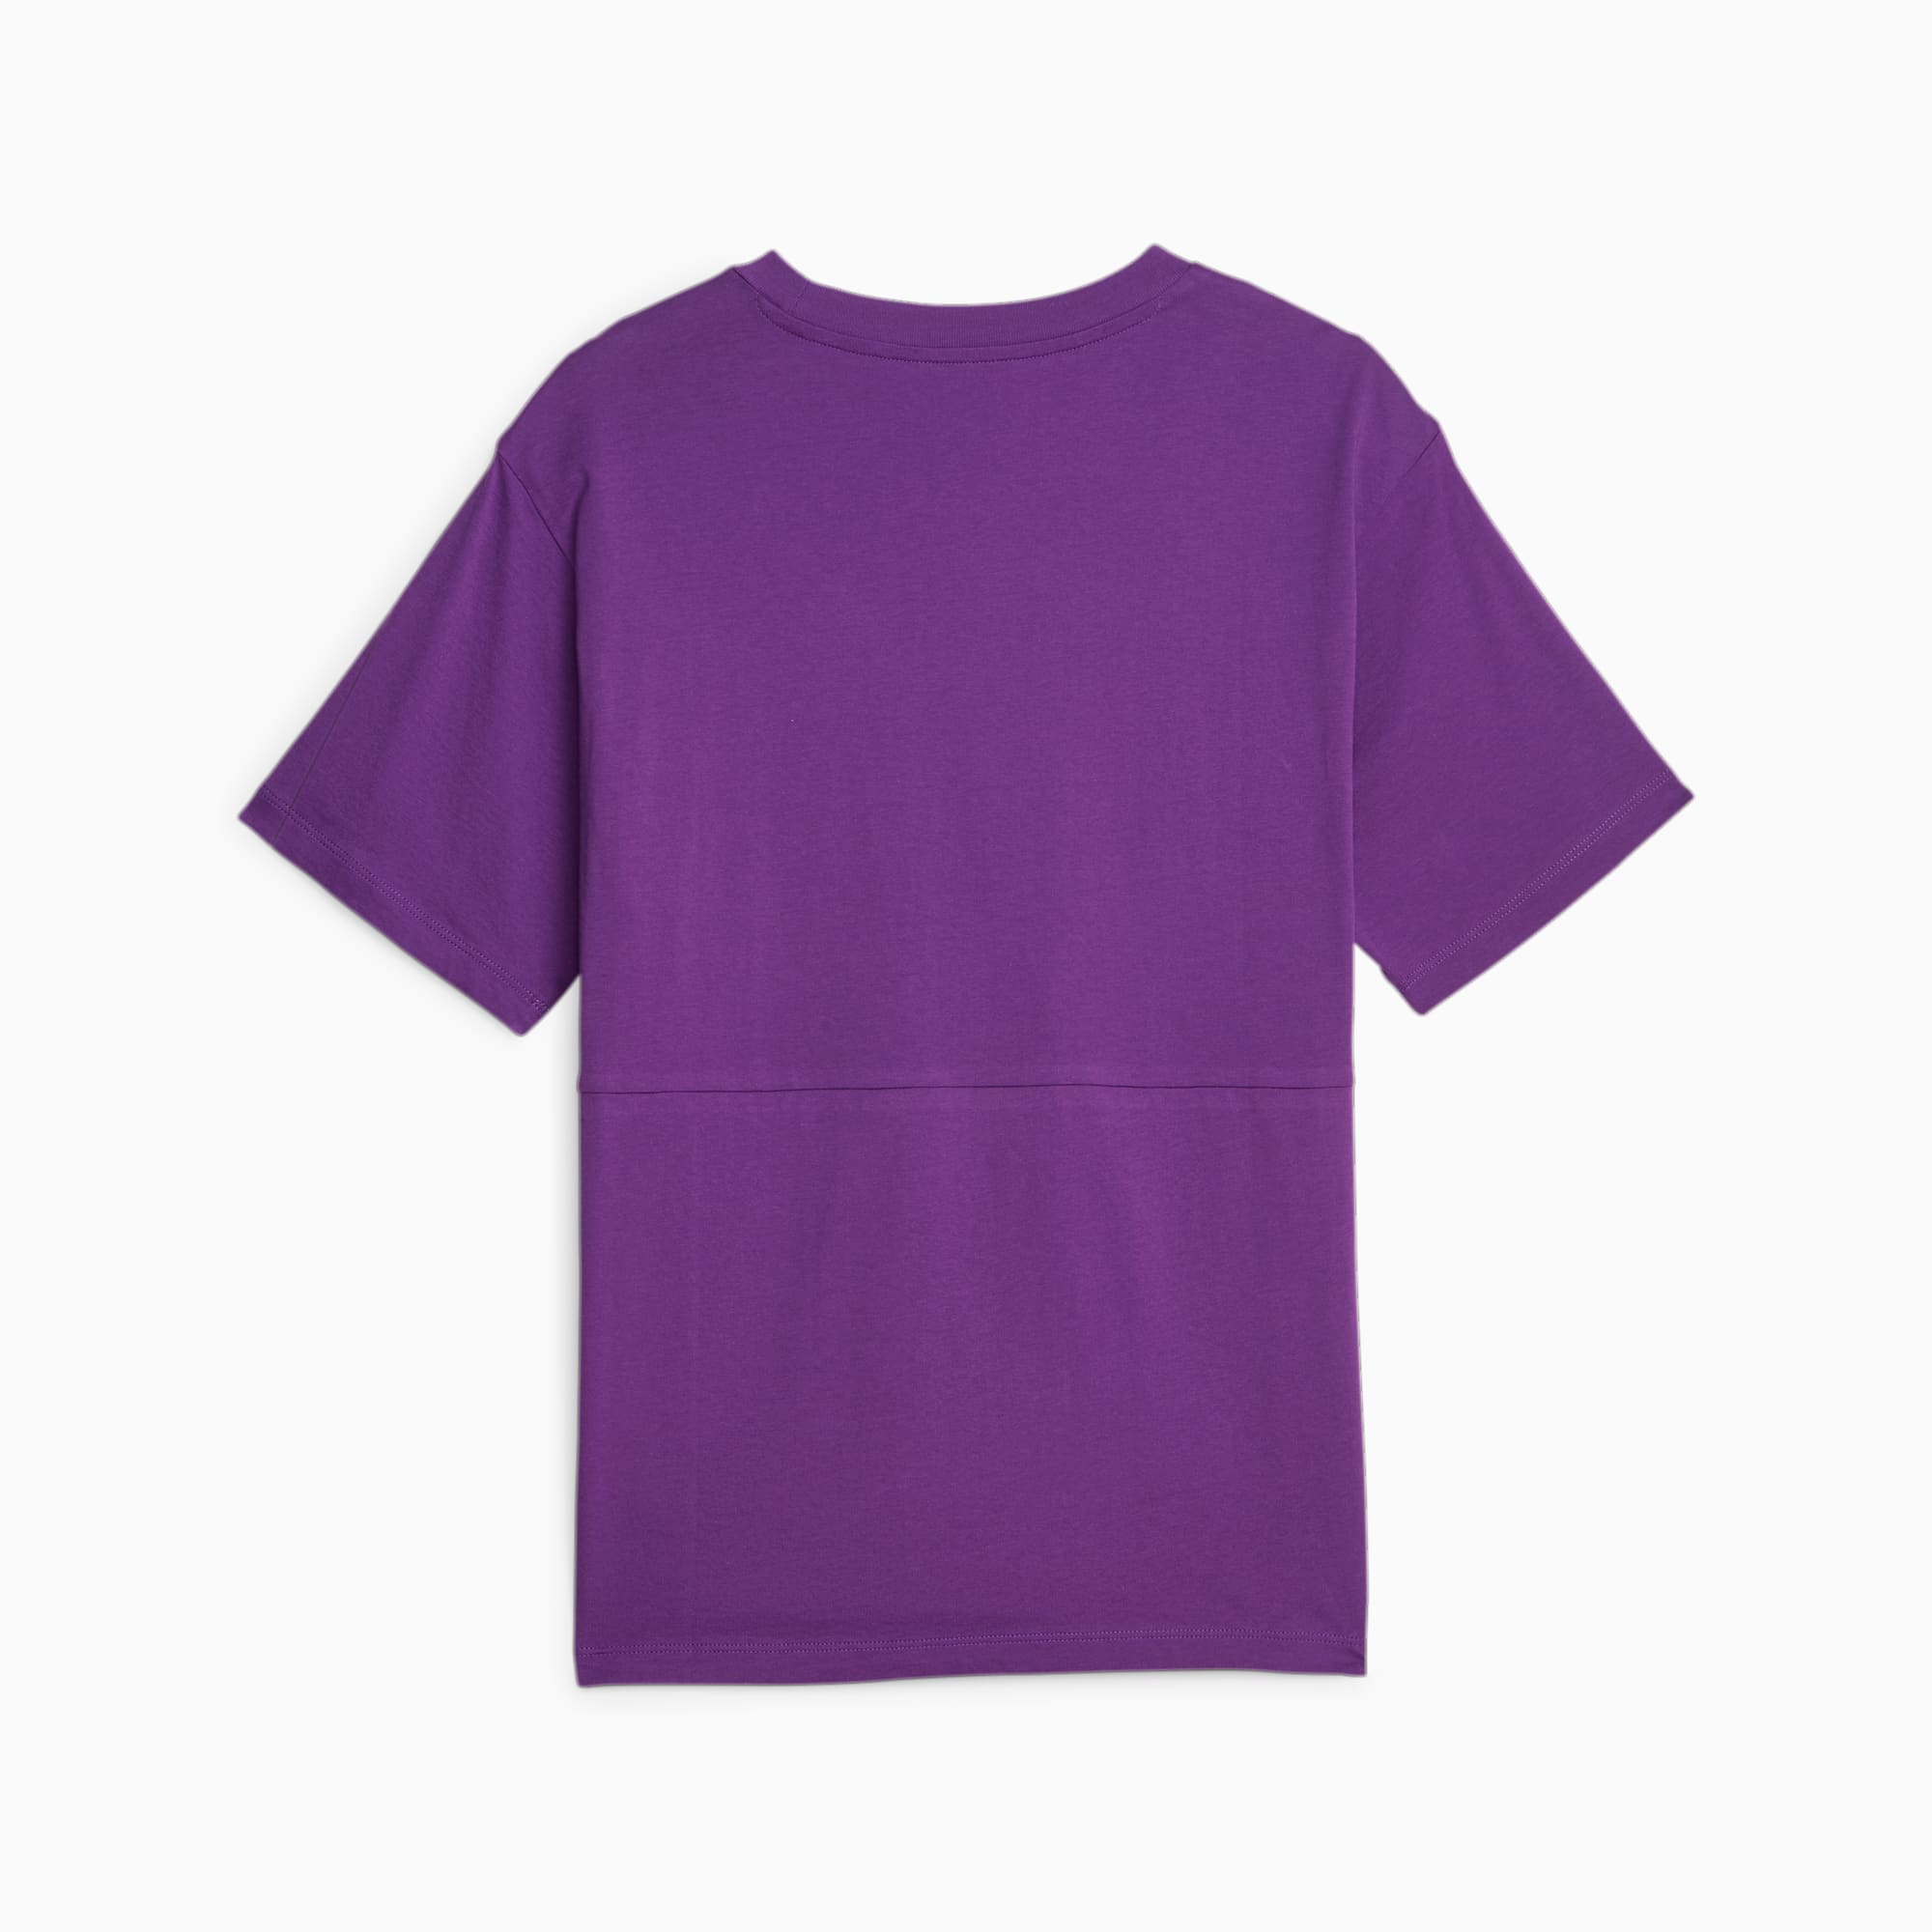 PUMA Power Logo Love Women's T-Shirt, Purple Pop, Size XS, Clothing